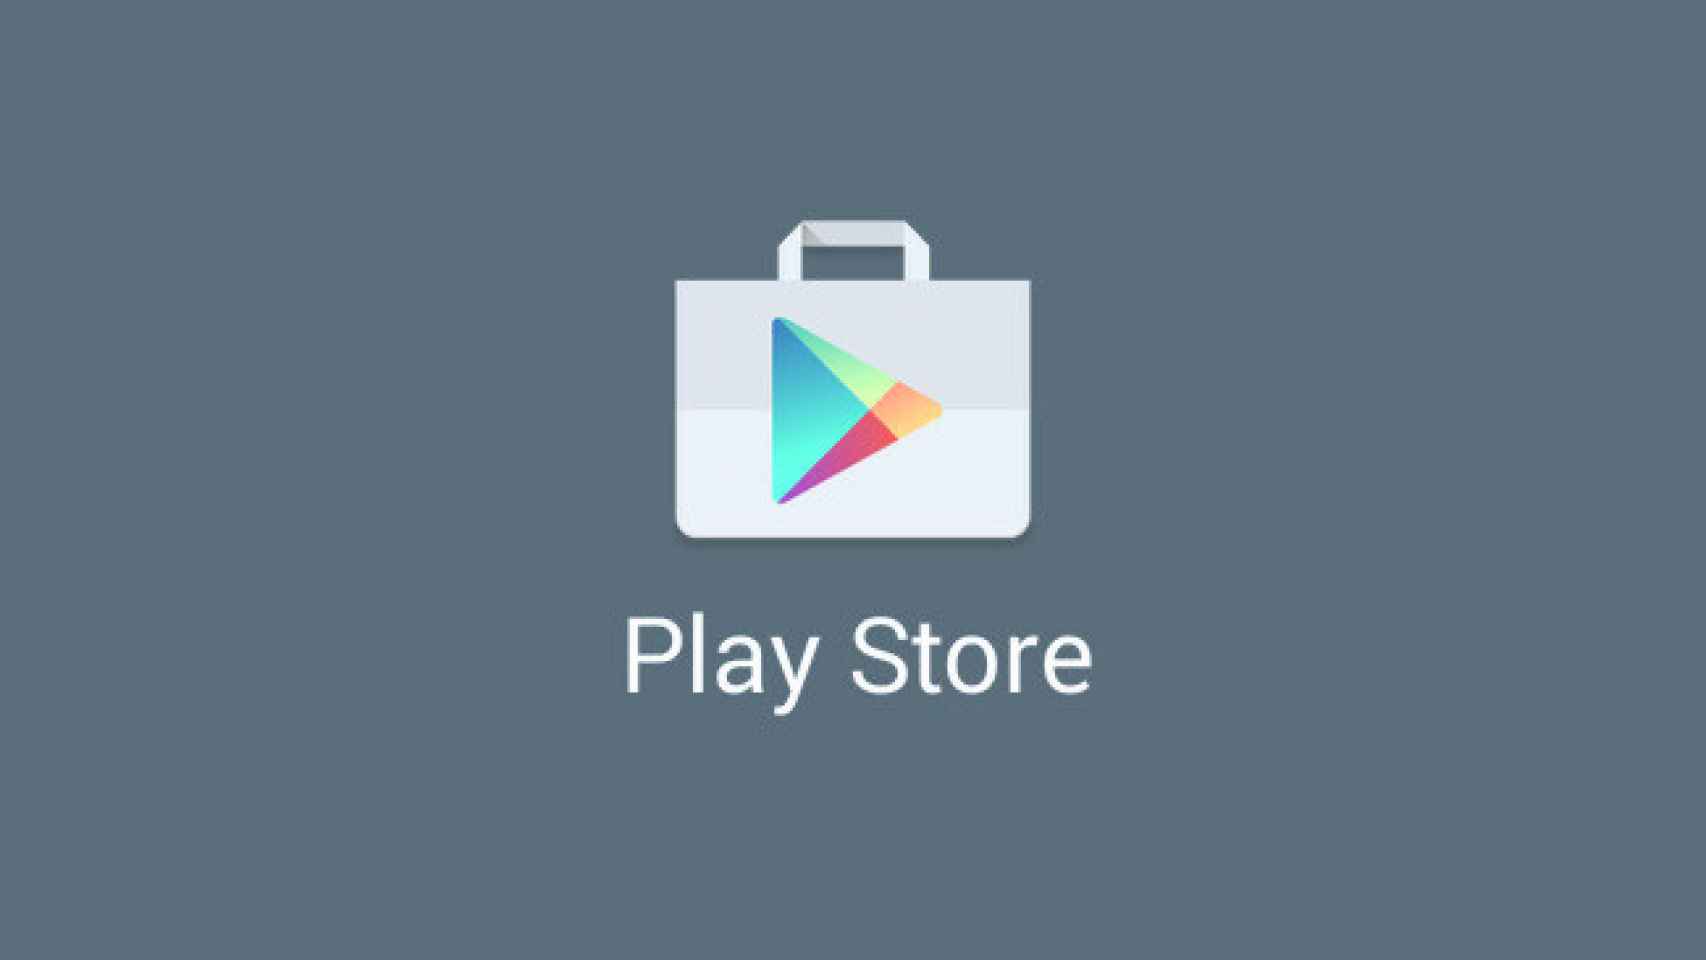 Приложение плей сторе. Play Store. Google Play. Гугота плей. Google Play Store.